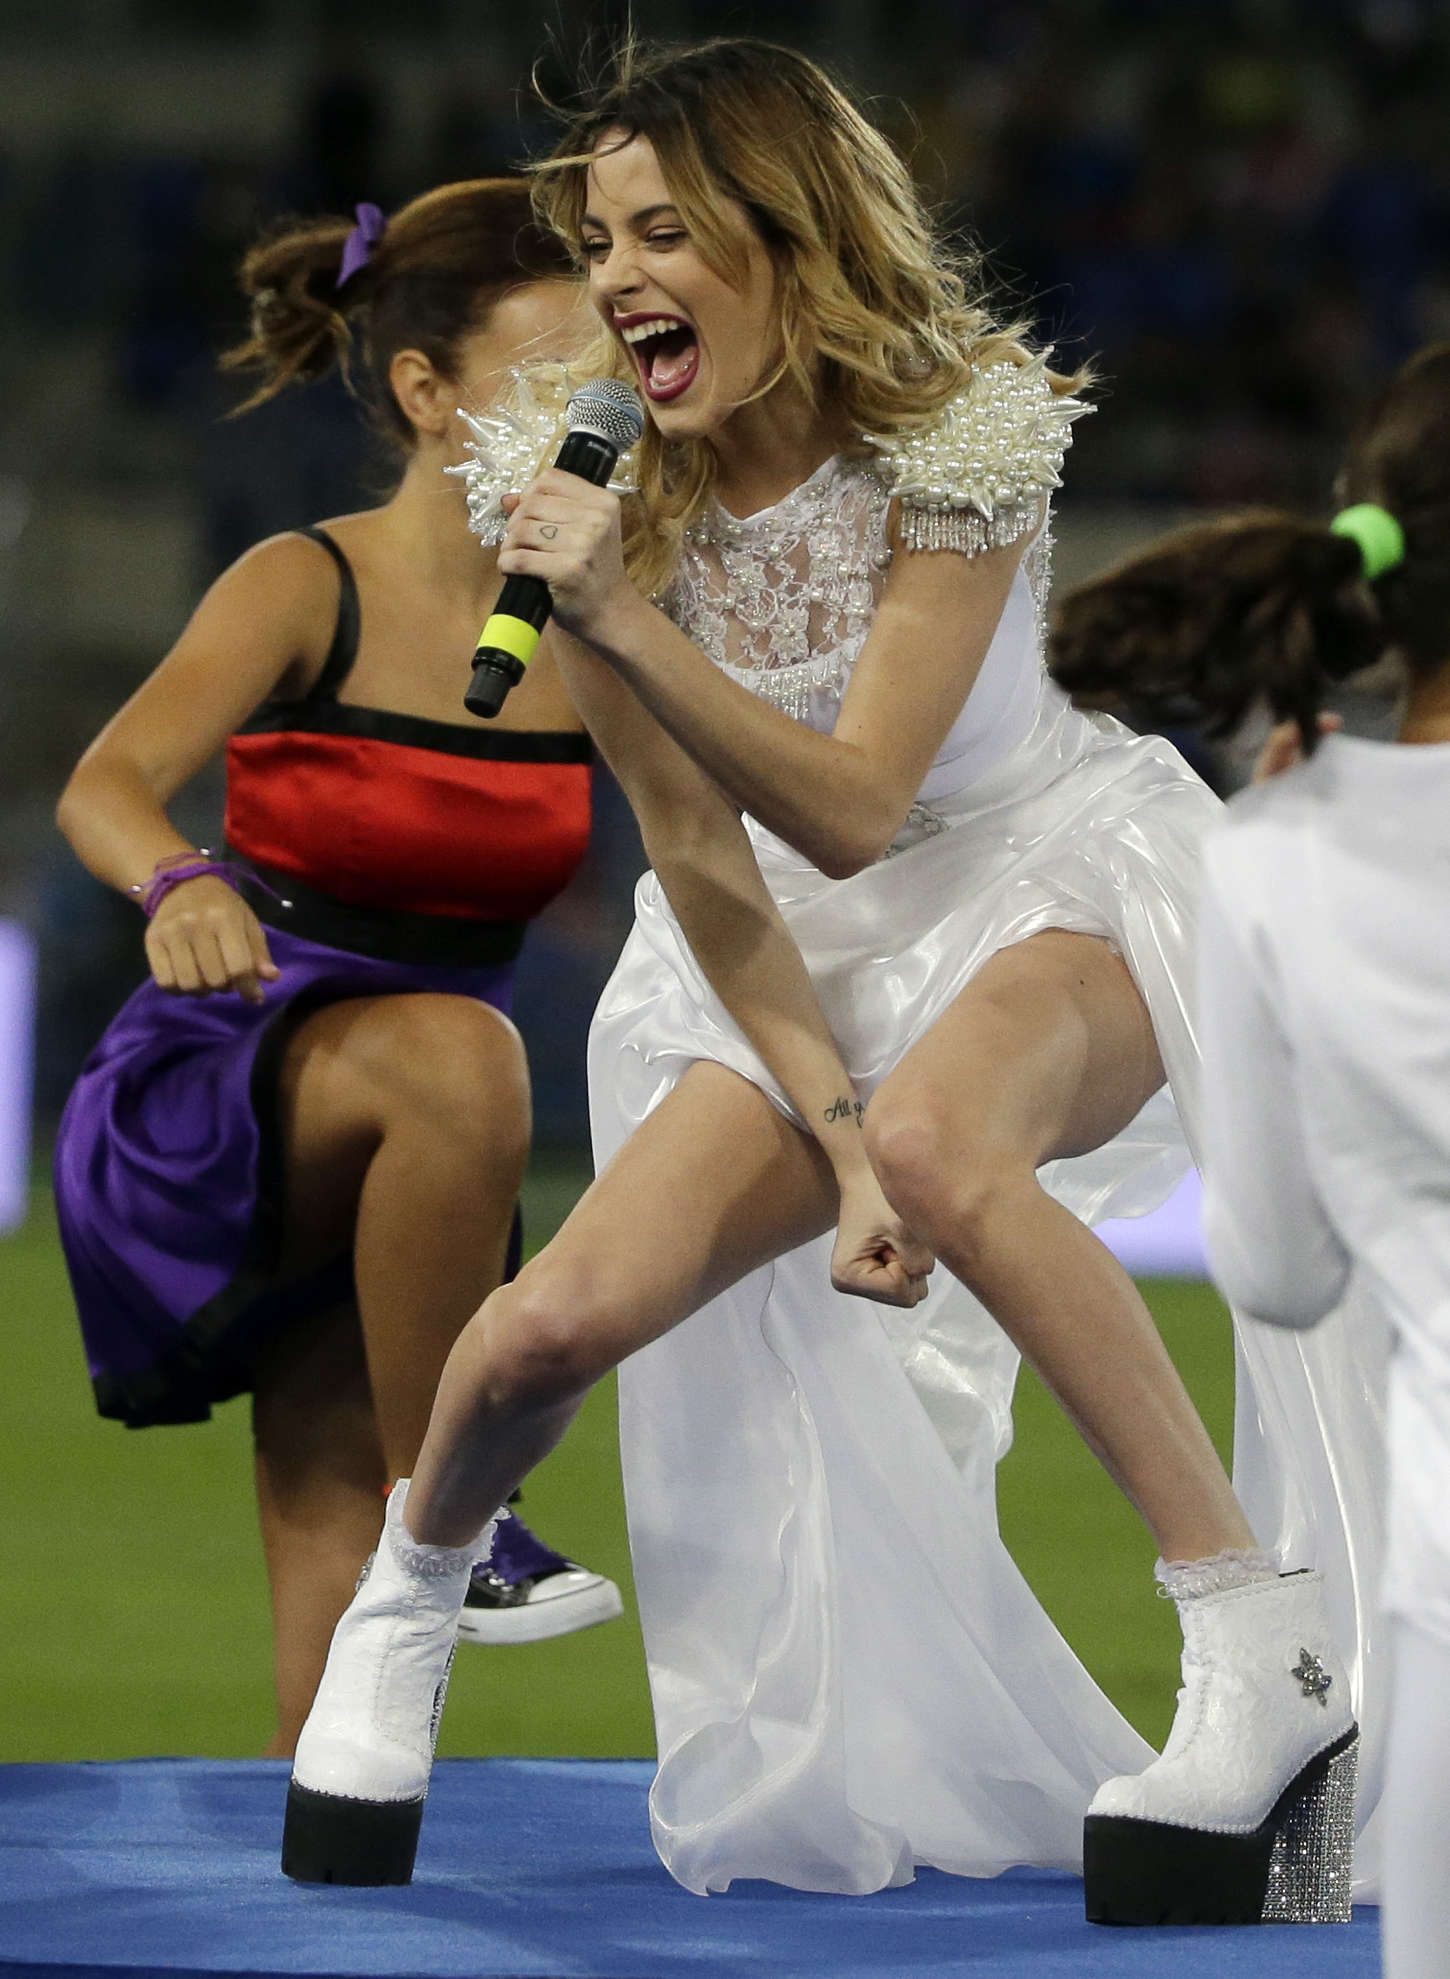 Martina Stoessel Performance at Romes Olympic Stadium-1